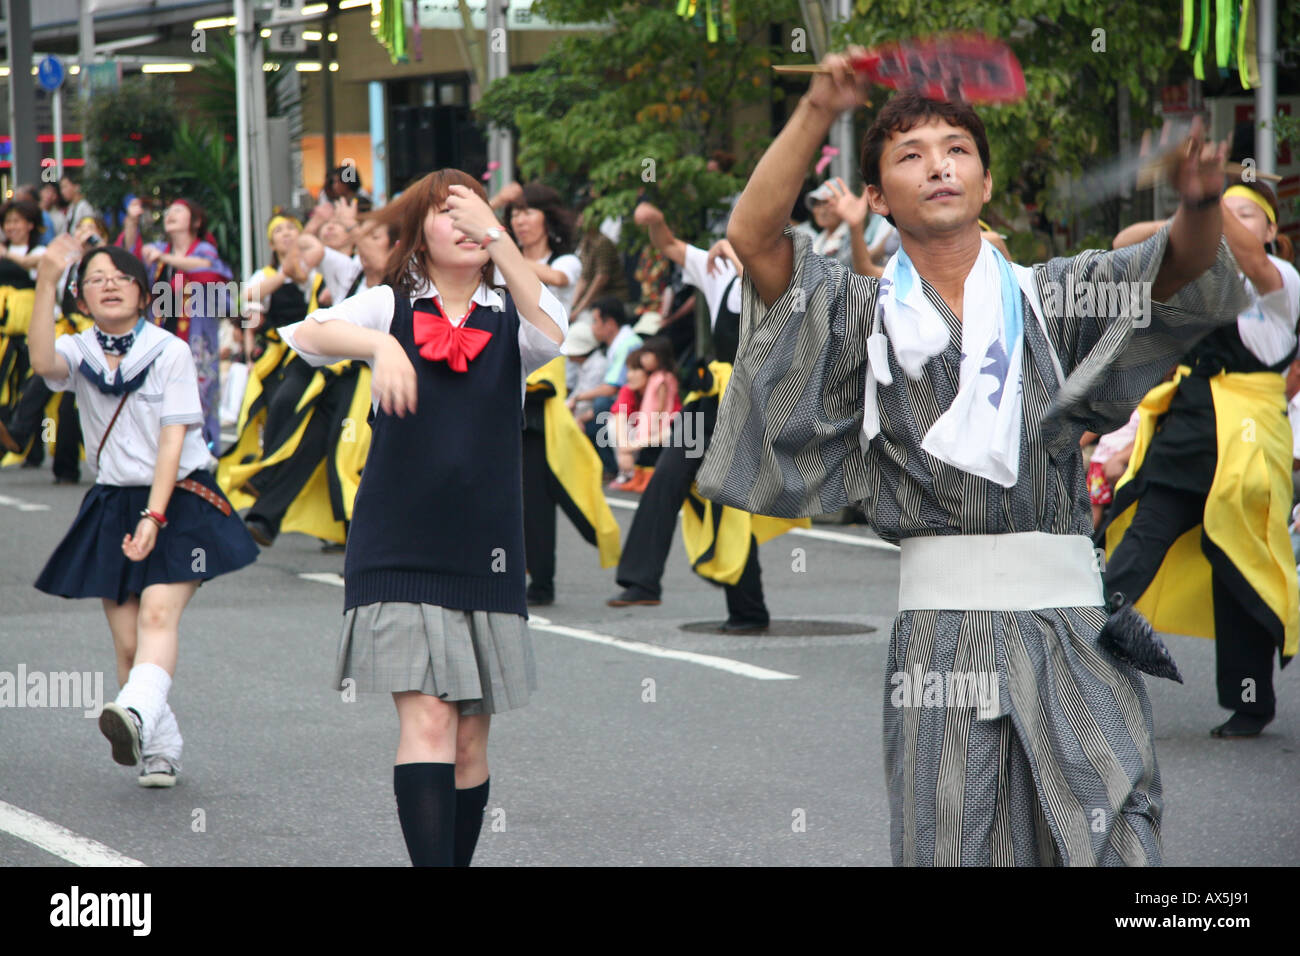 Yosakoi modern festival dance at a summer festival in Japan Stock Photo